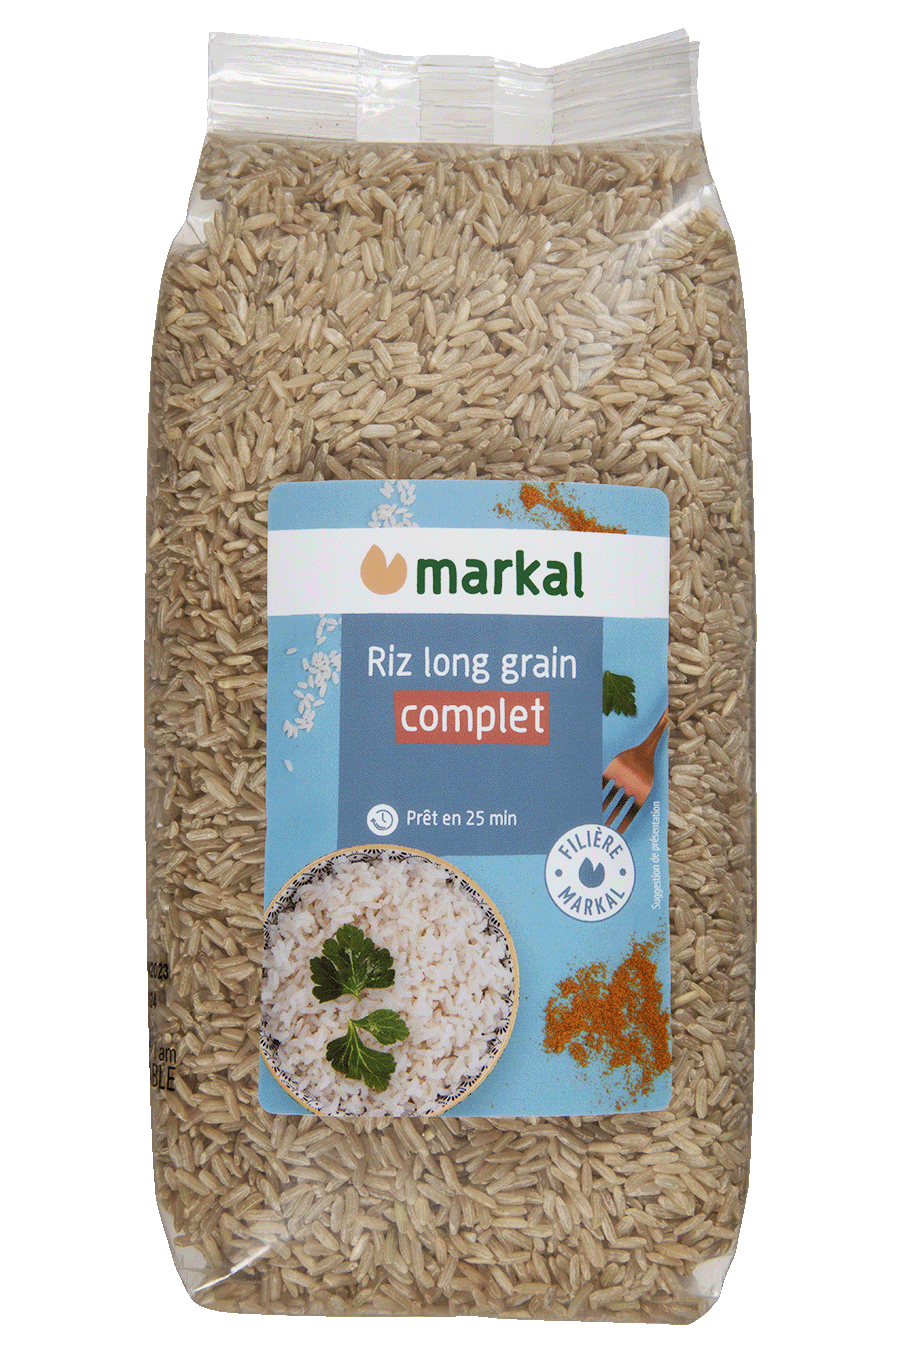 Whole grain long grain rice